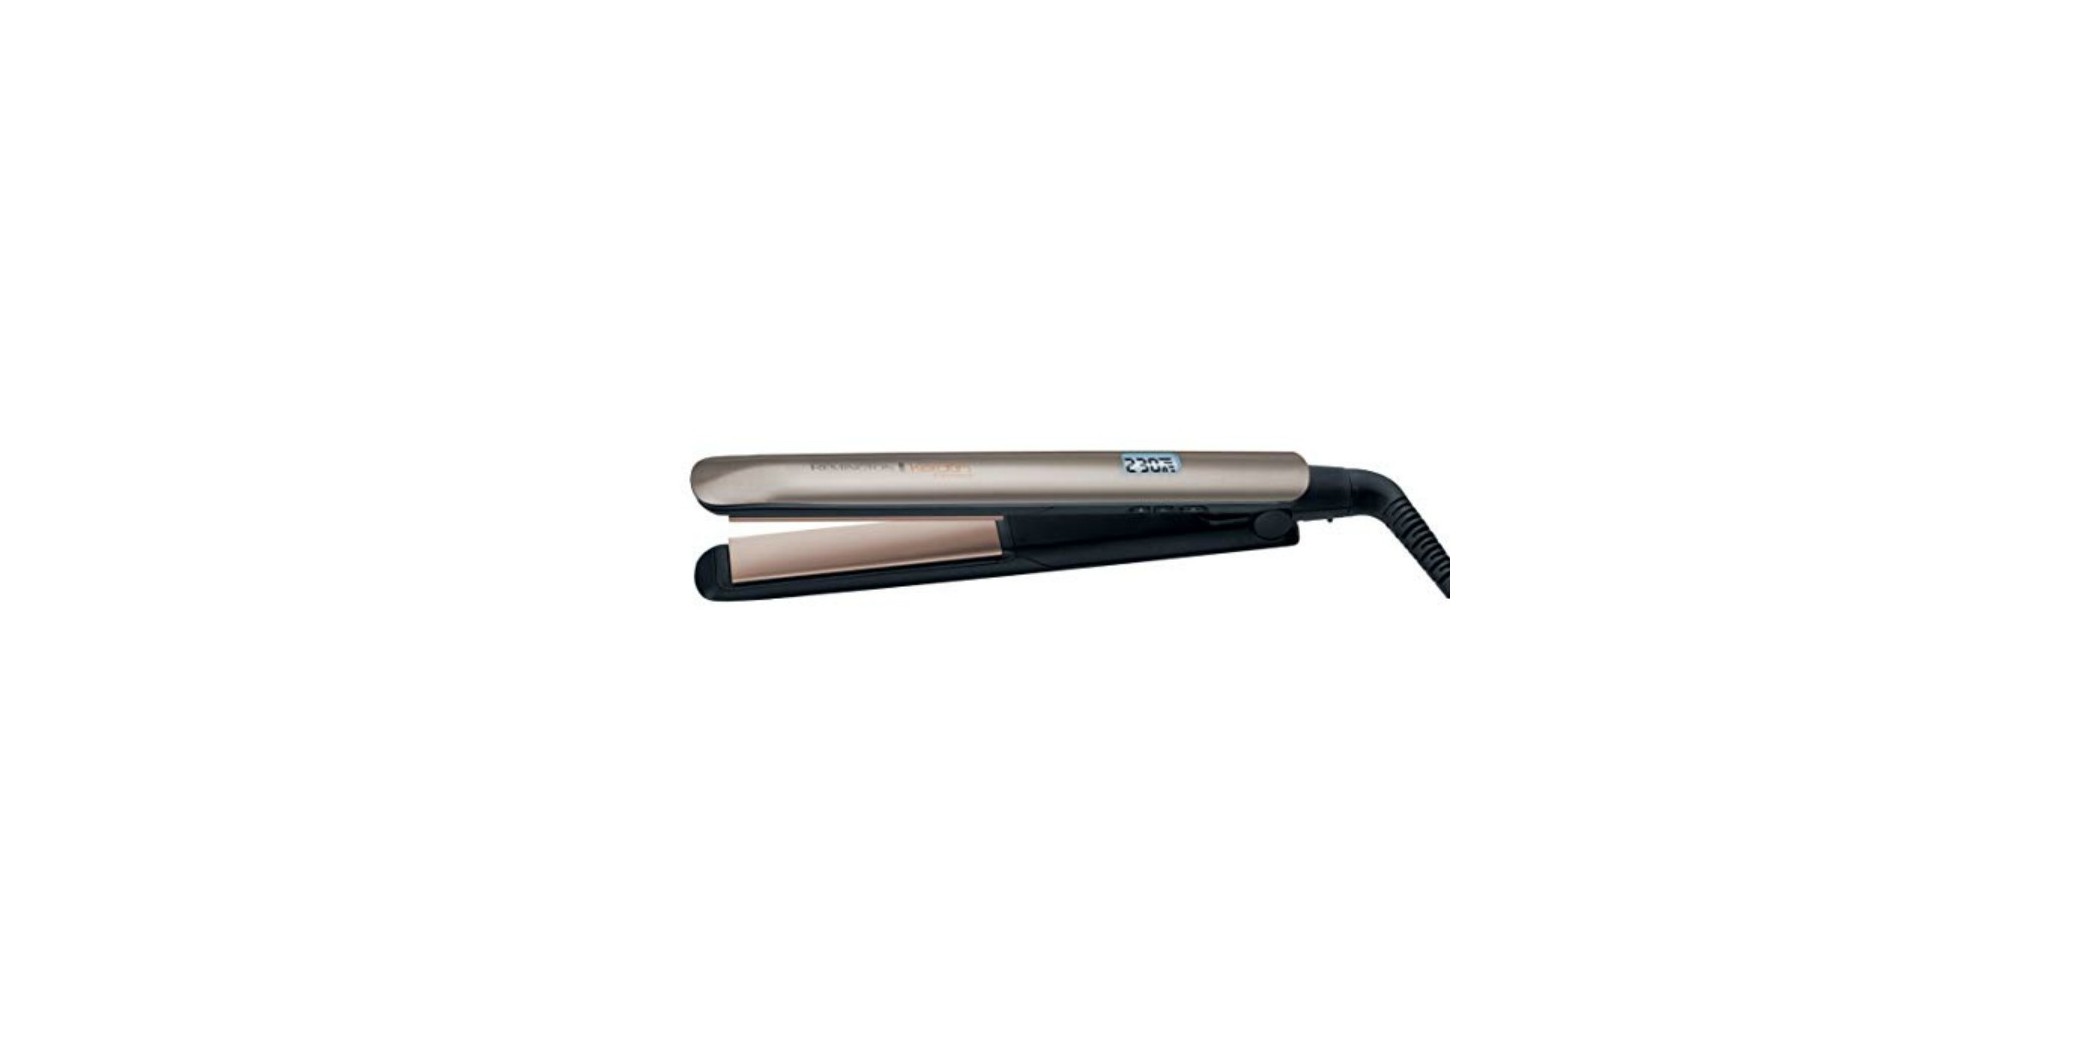 Remington S8540 Keratin Protect Hair Straightener